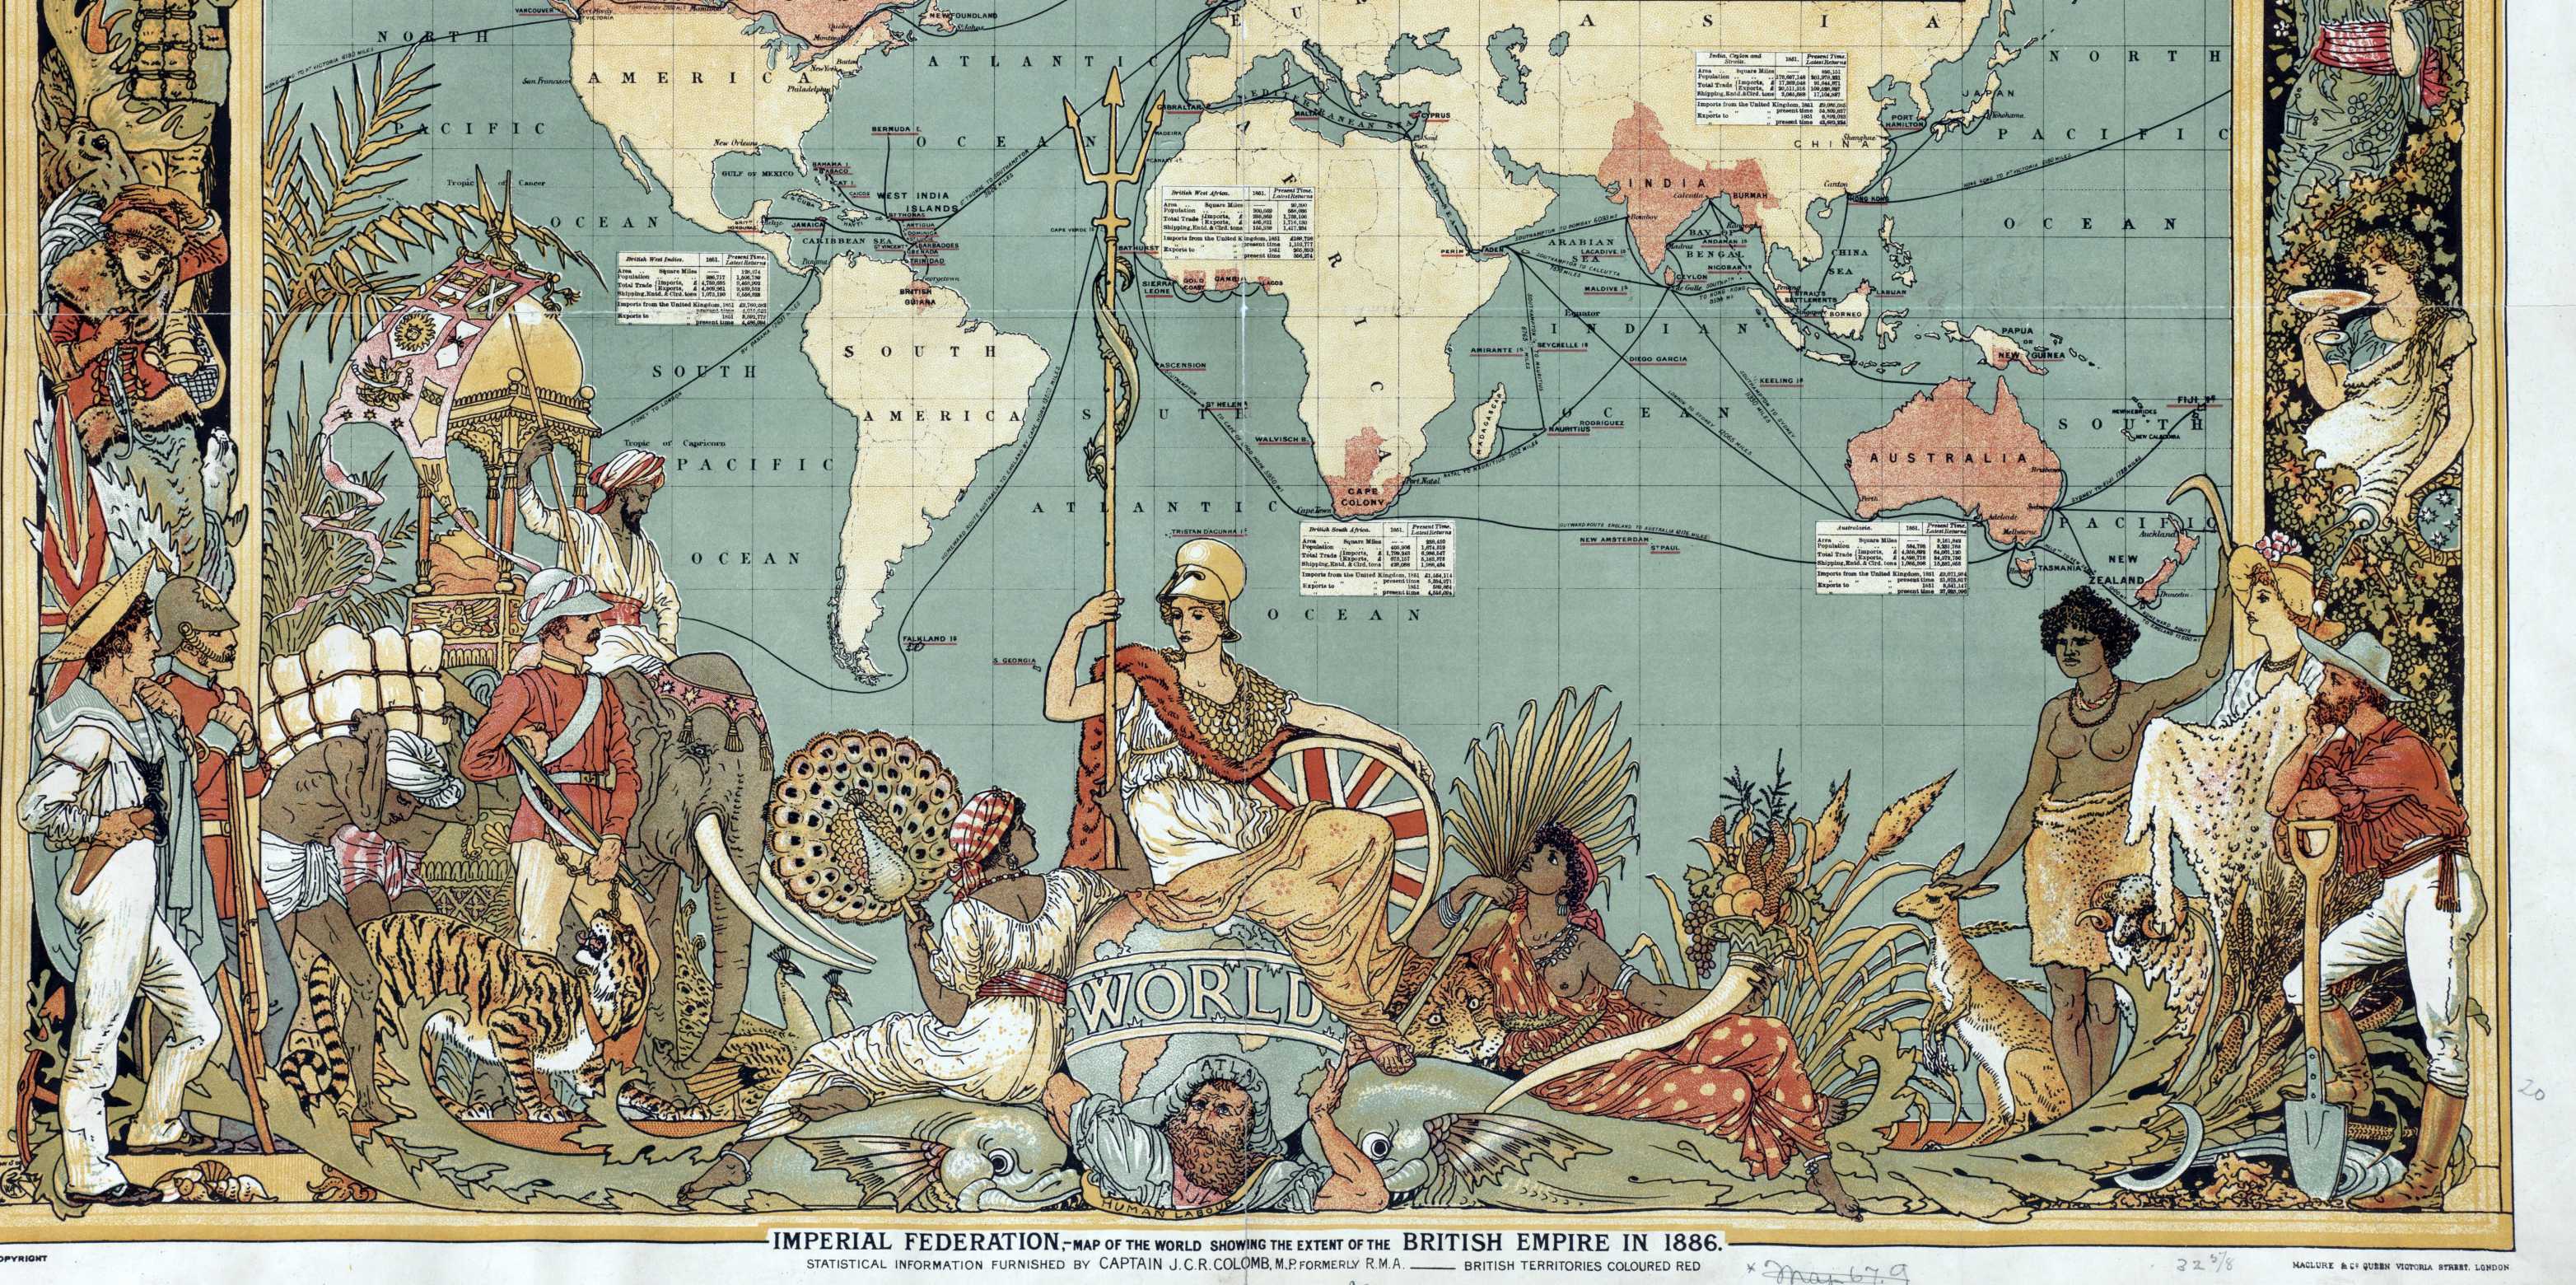 Enlarged view: British Empire